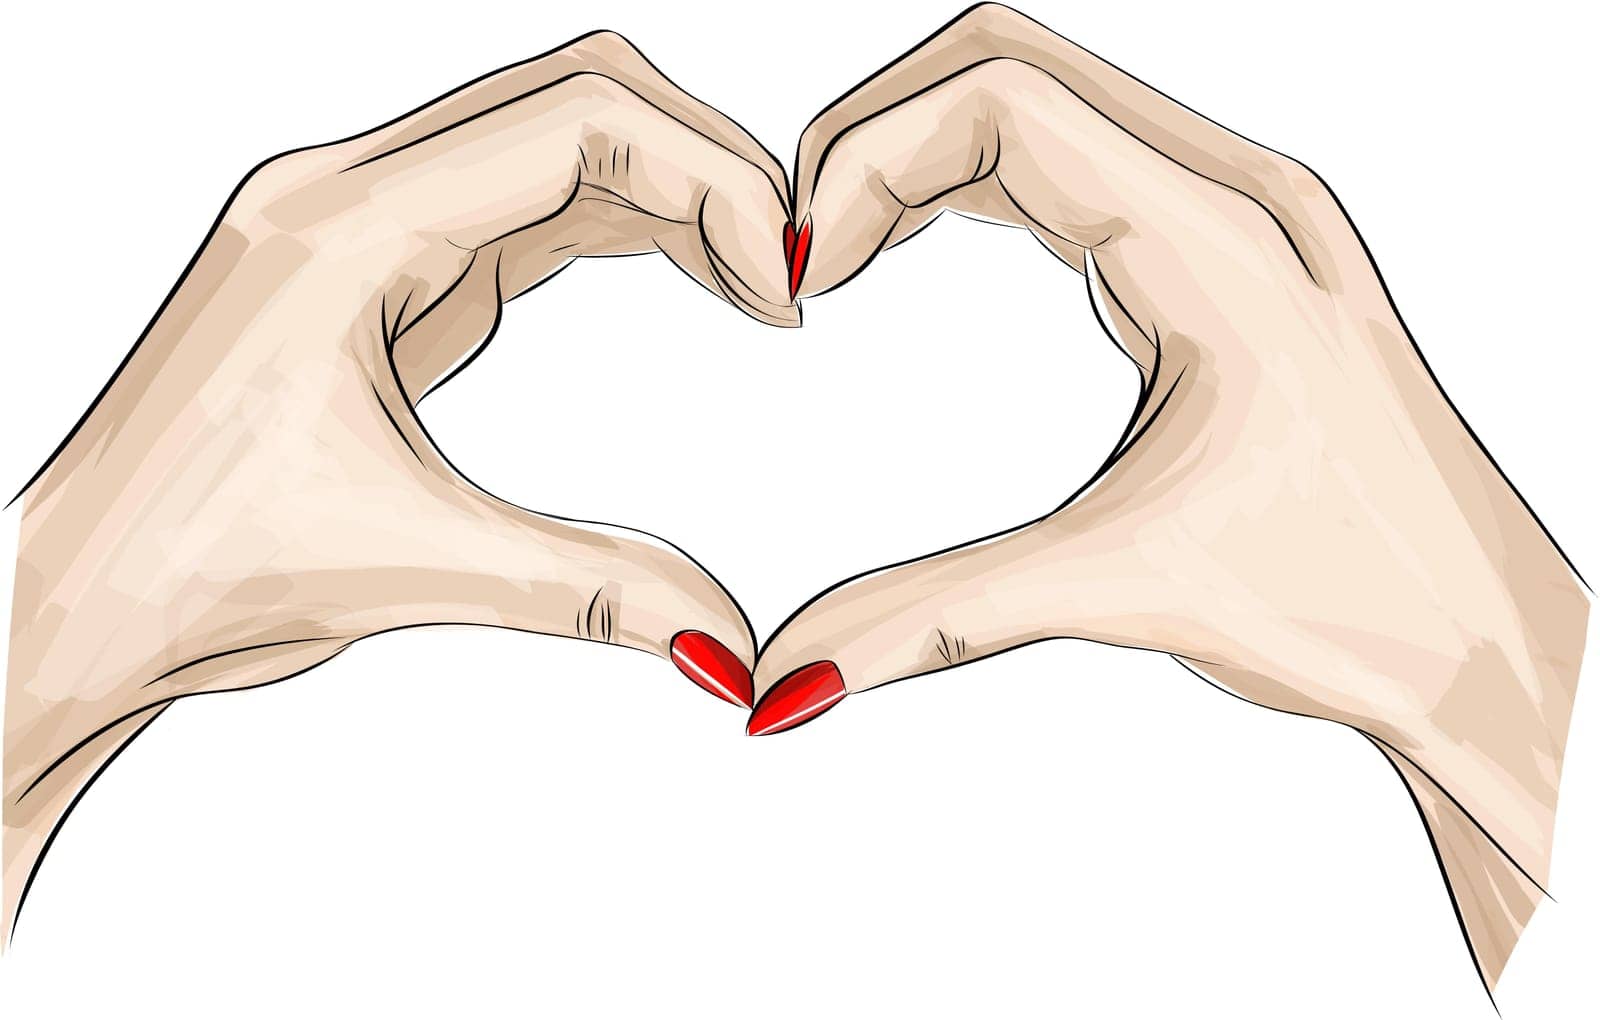 Sketch of hands showing heart shape gesture, Hand drawn vector line art. Sketch of hands showing heart shape gesture, Hand drawn vector line art illustrationillustration